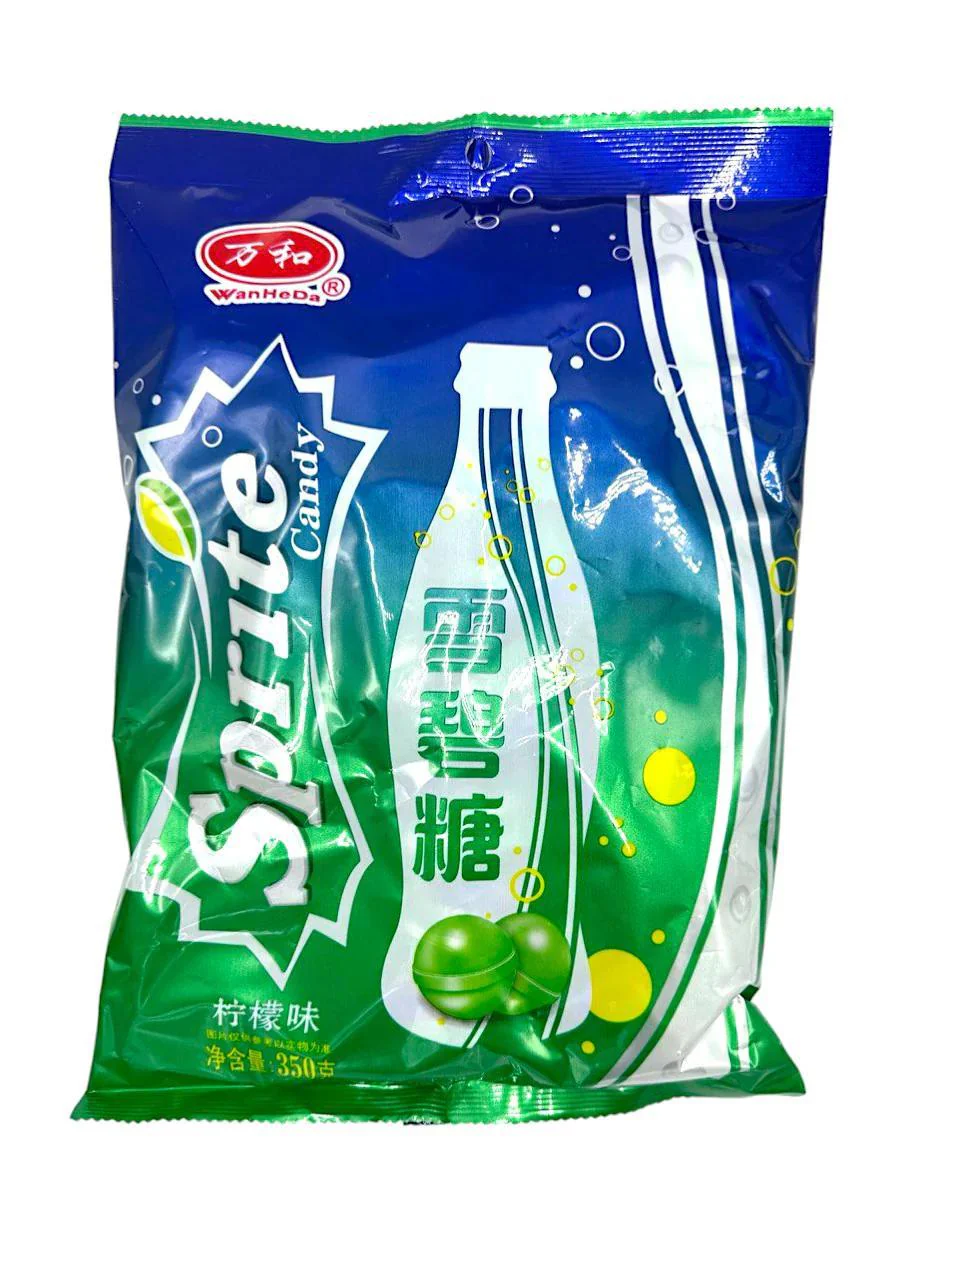 Wanhe Sprite Candy 350g (China)